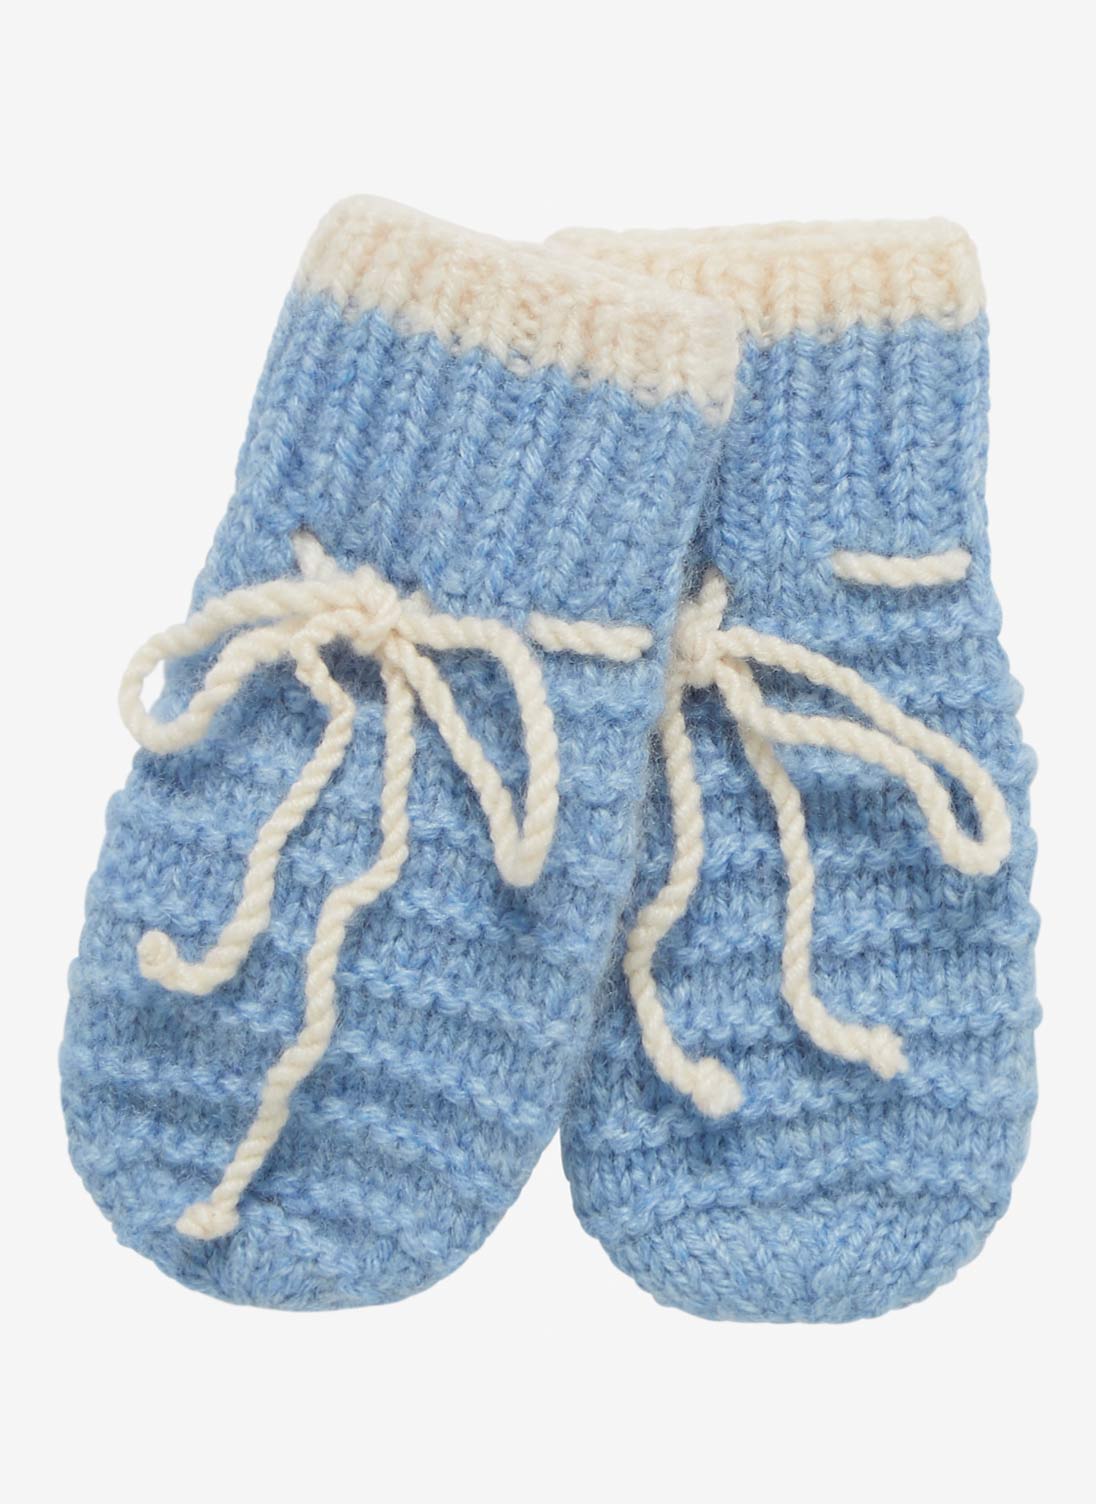 Cashmere Hand Knit Mittens Pale Blue